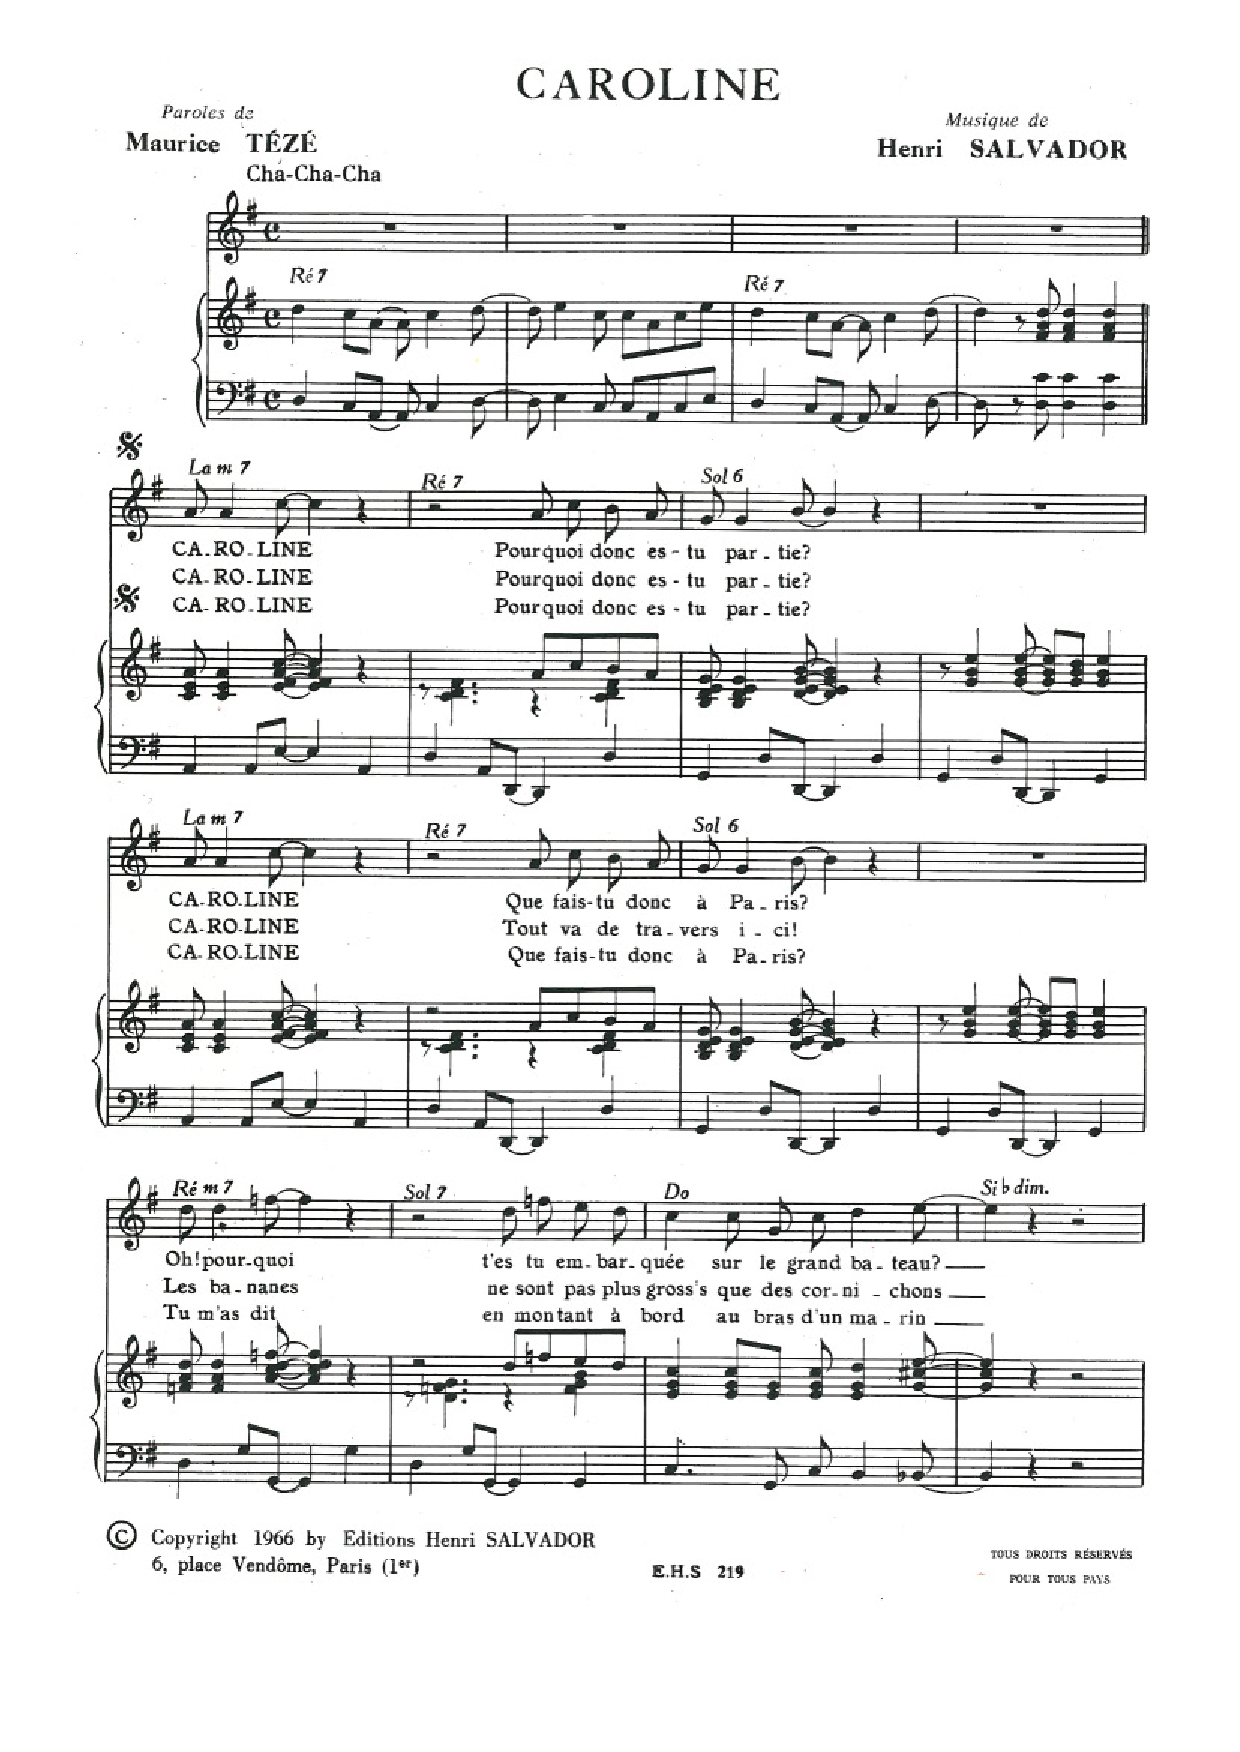 Henri Salvador Caroline Sheet Music Notes & Chords for Piano & Vocal - Download or Print PDF